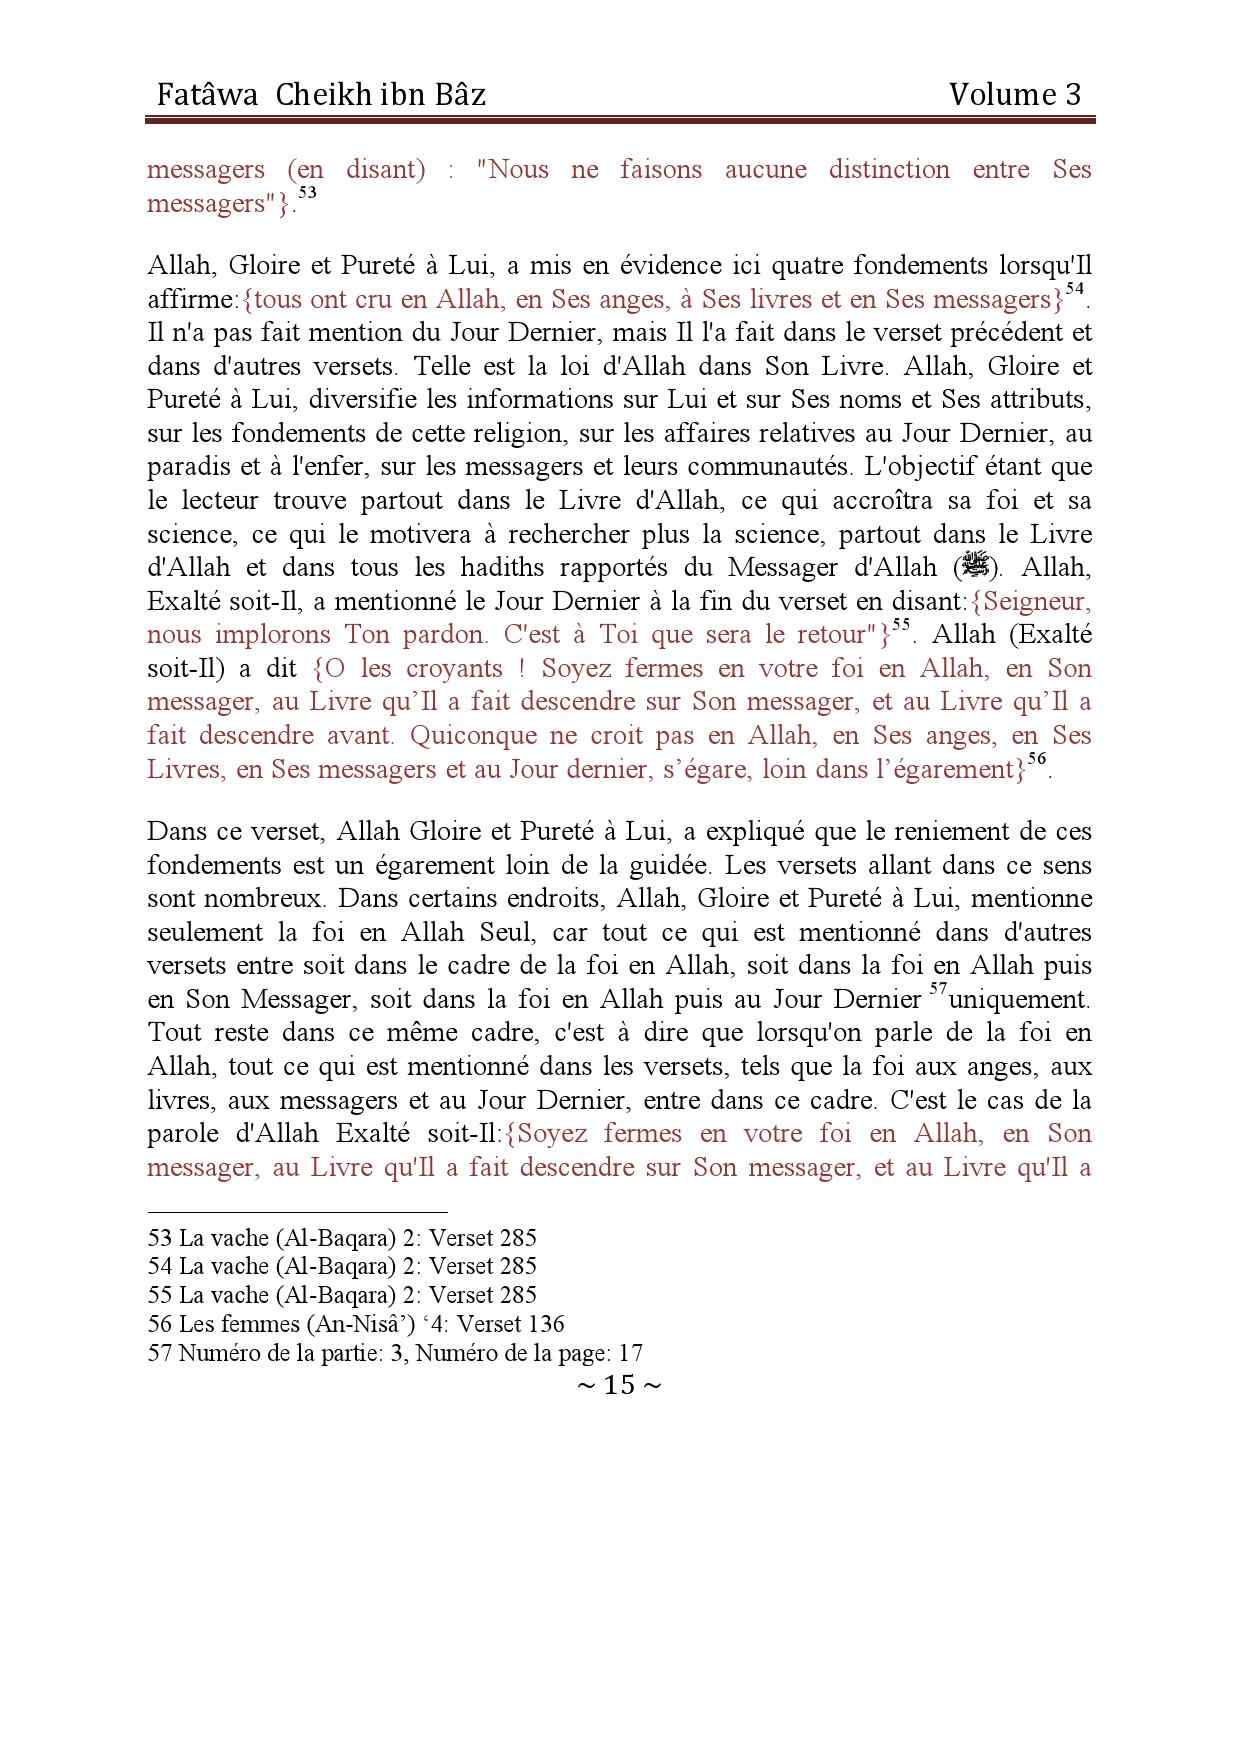 Fatawa_ibnBaz_Volume_30.pdf, 228-Sayfa 